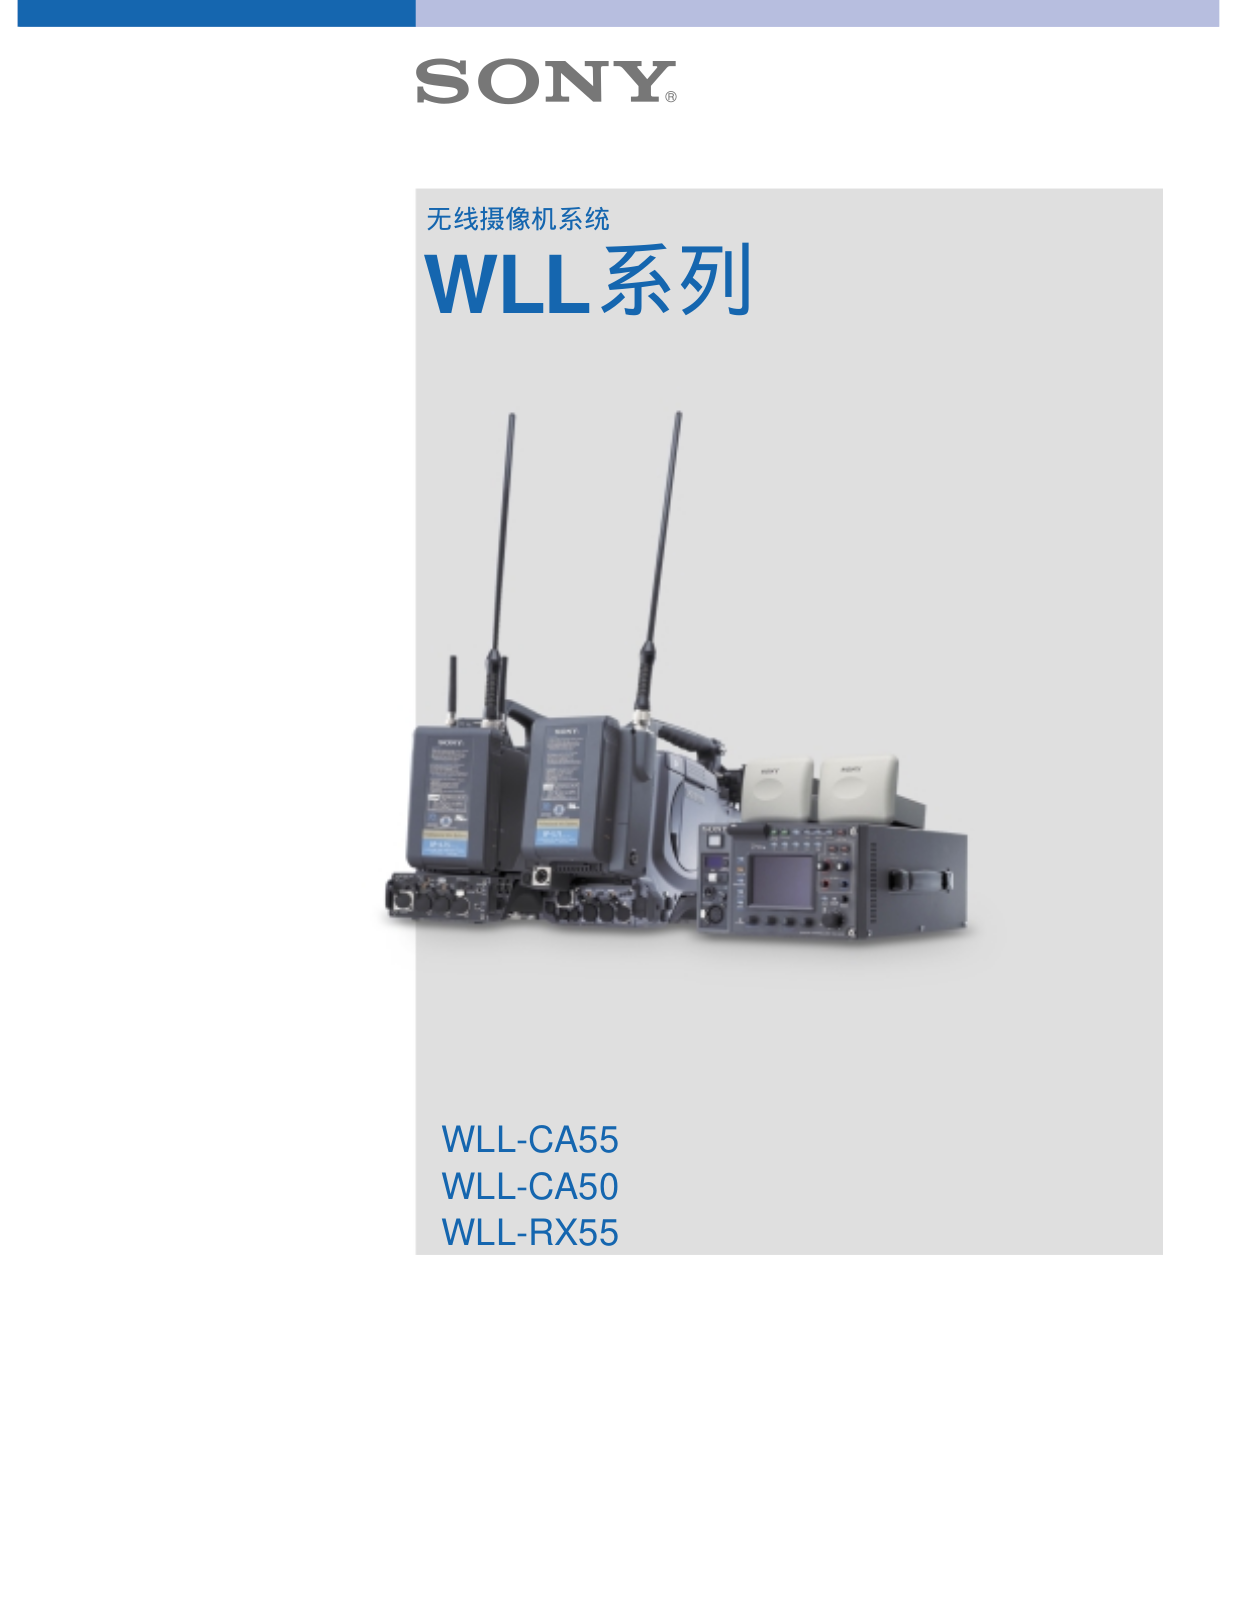 SONY WLL-CA55, WLL-CA50, WLL-RX55 User Manual